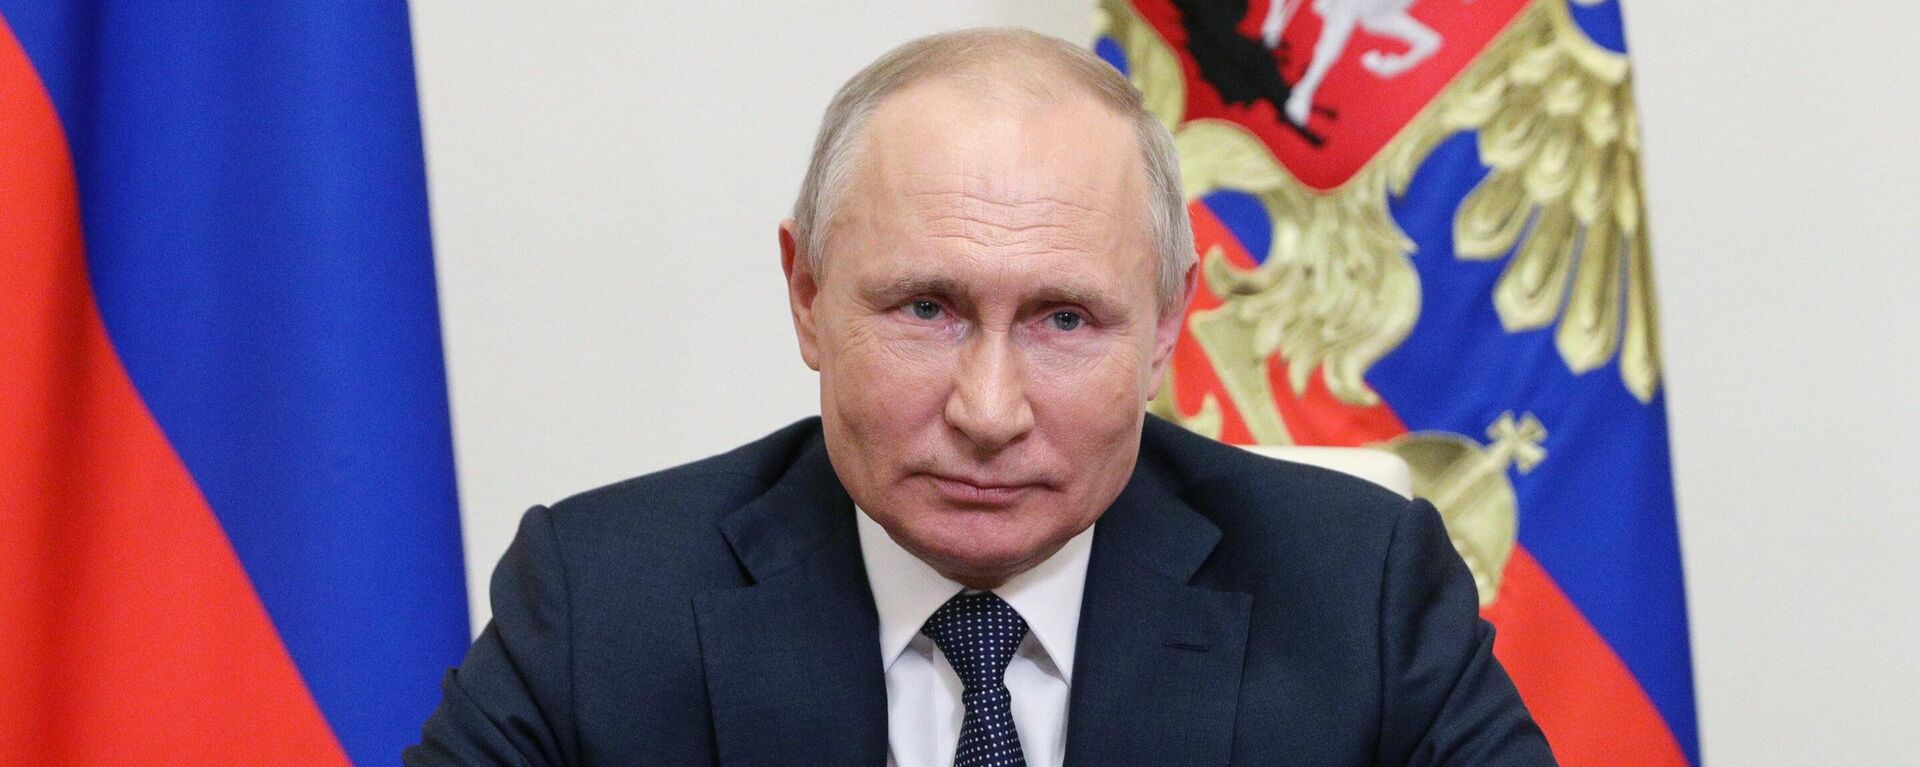 Vladímir Putin, presidente de Rusia - Sputnik Mundo, 1920, 01.07.2021